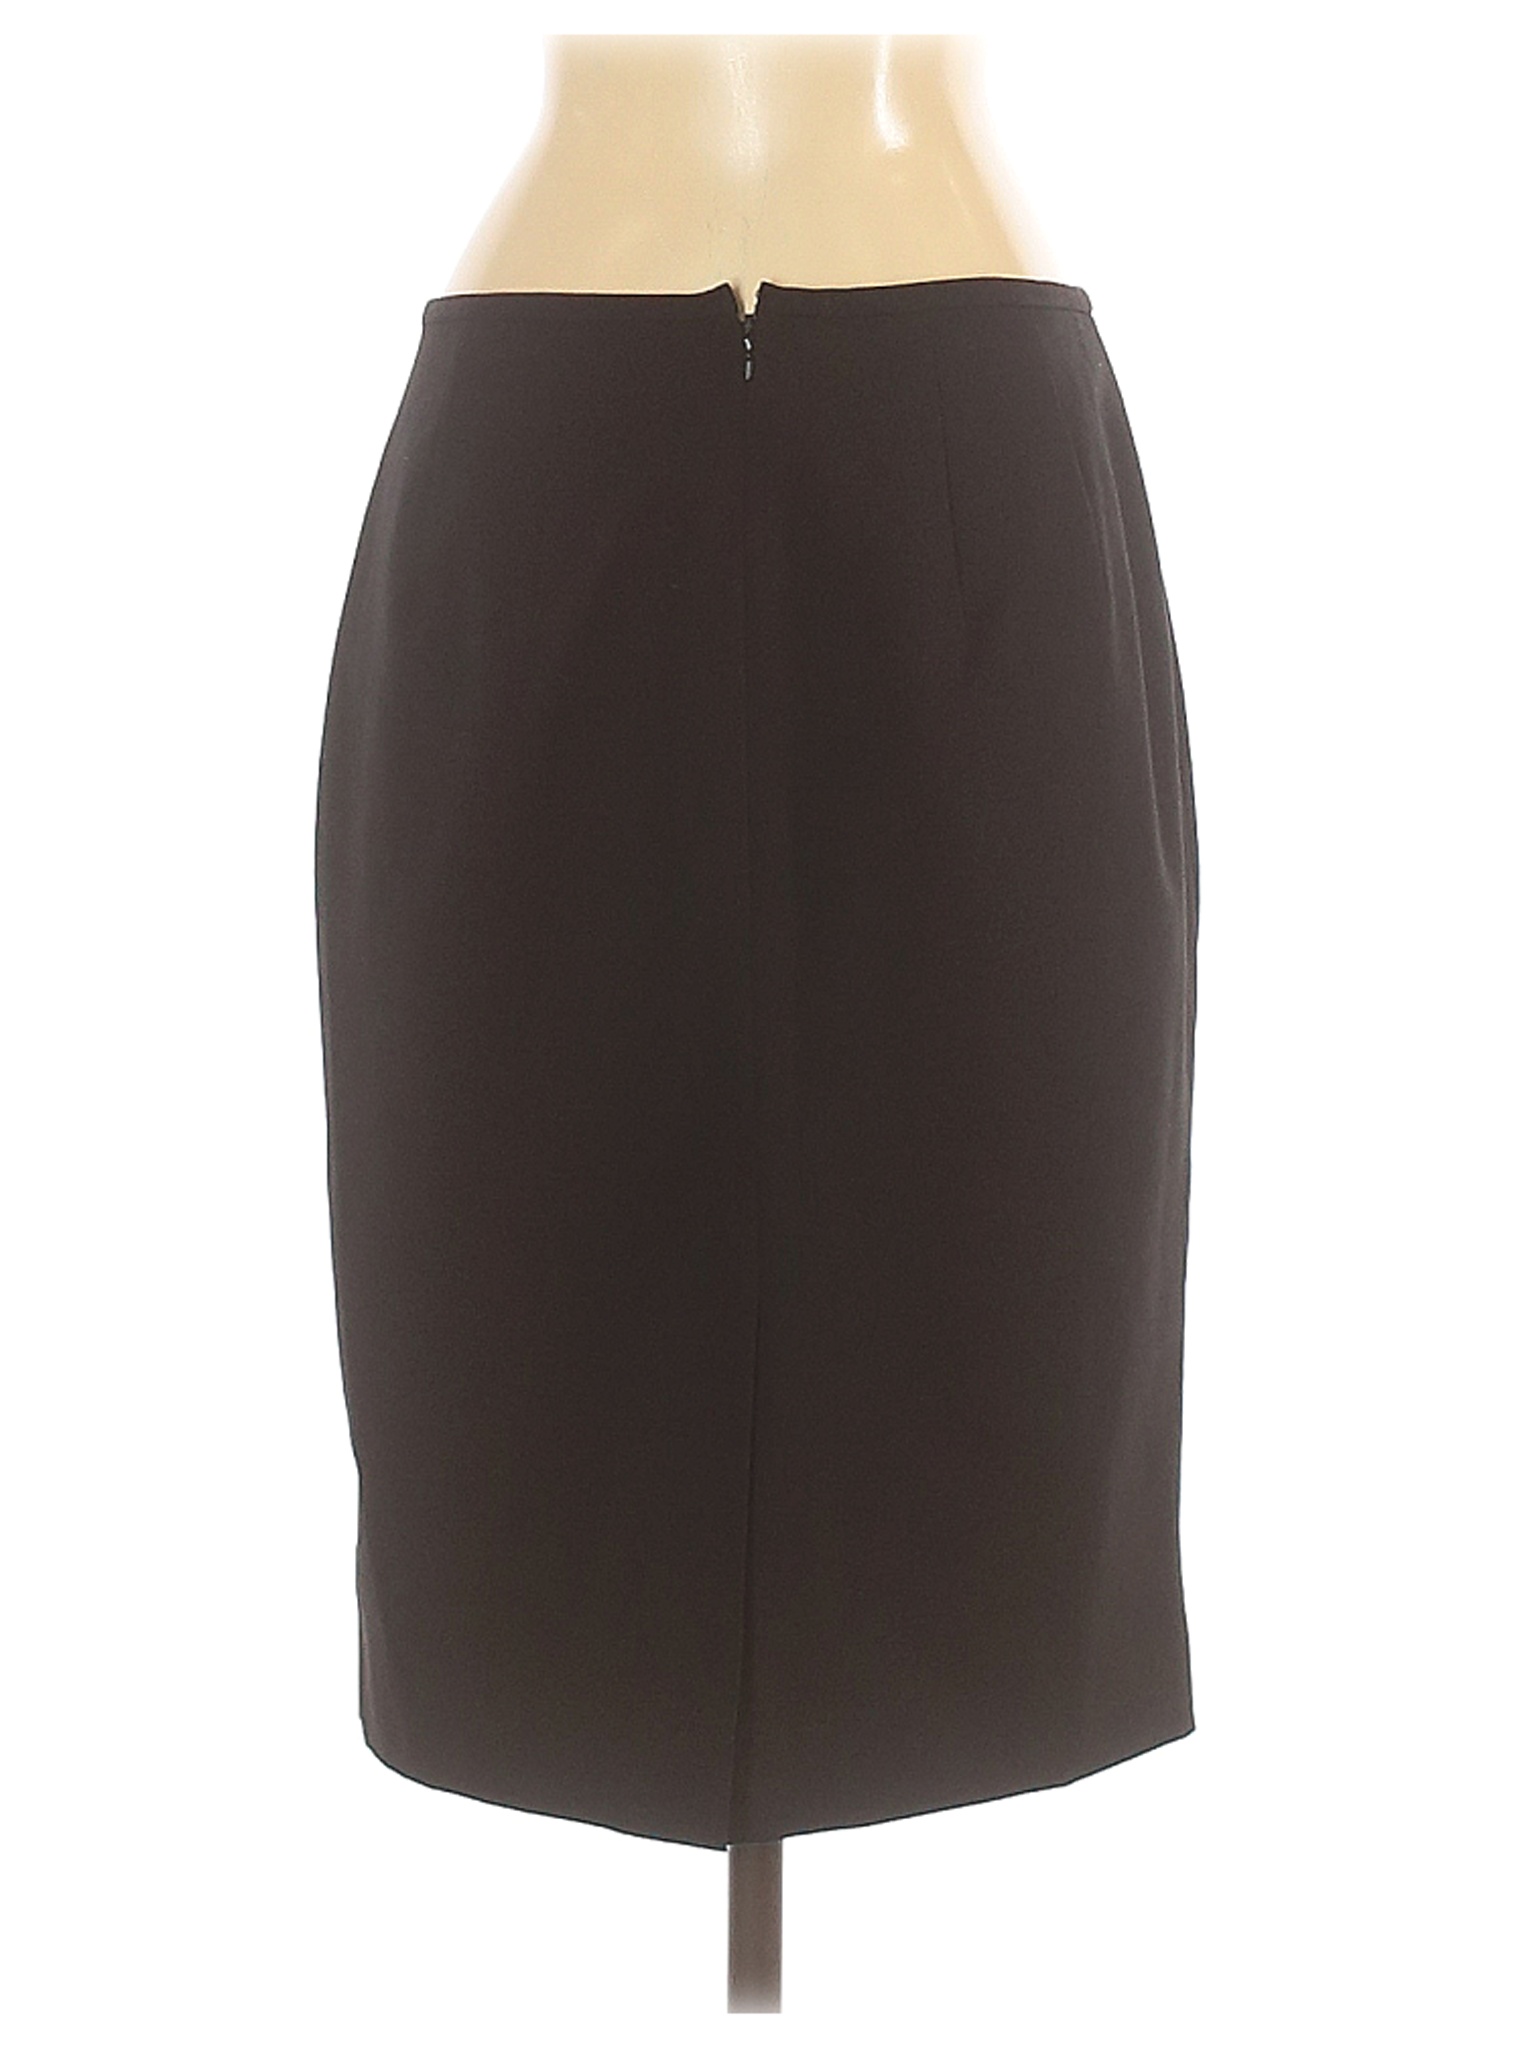 Calvin Klein Women Brown Casual Skirt 4 | eBay